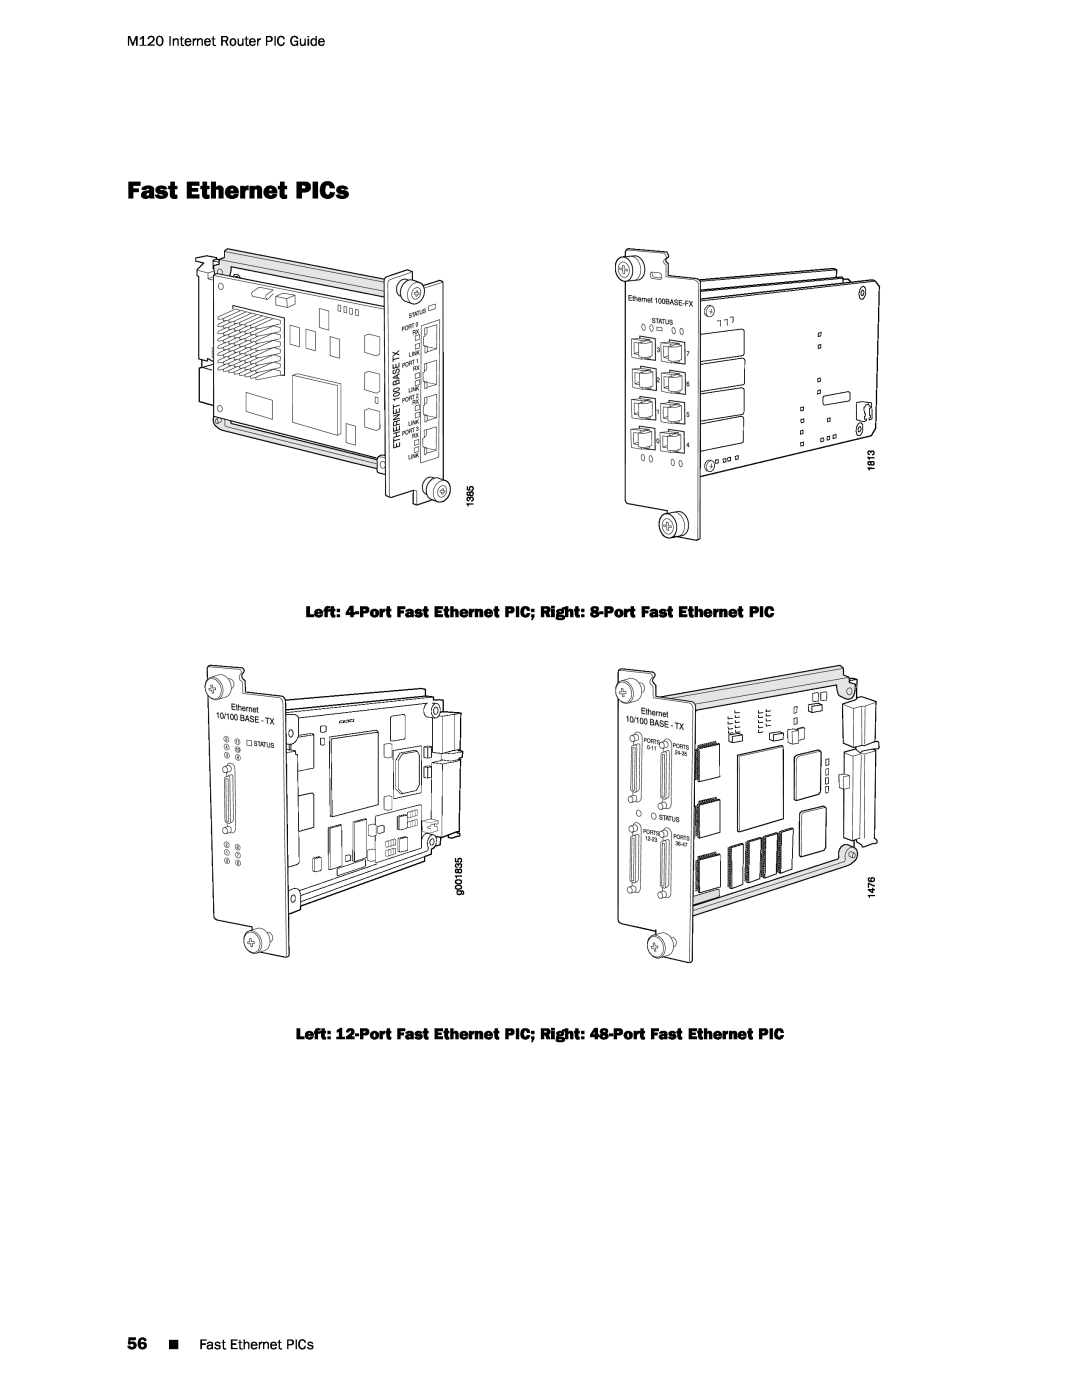 Juniper Networks M120 manual Fast Ethernet PICs, Left 4-Port Fast Ethernet PIC Right 8-Port Fast Ethernet PIC 